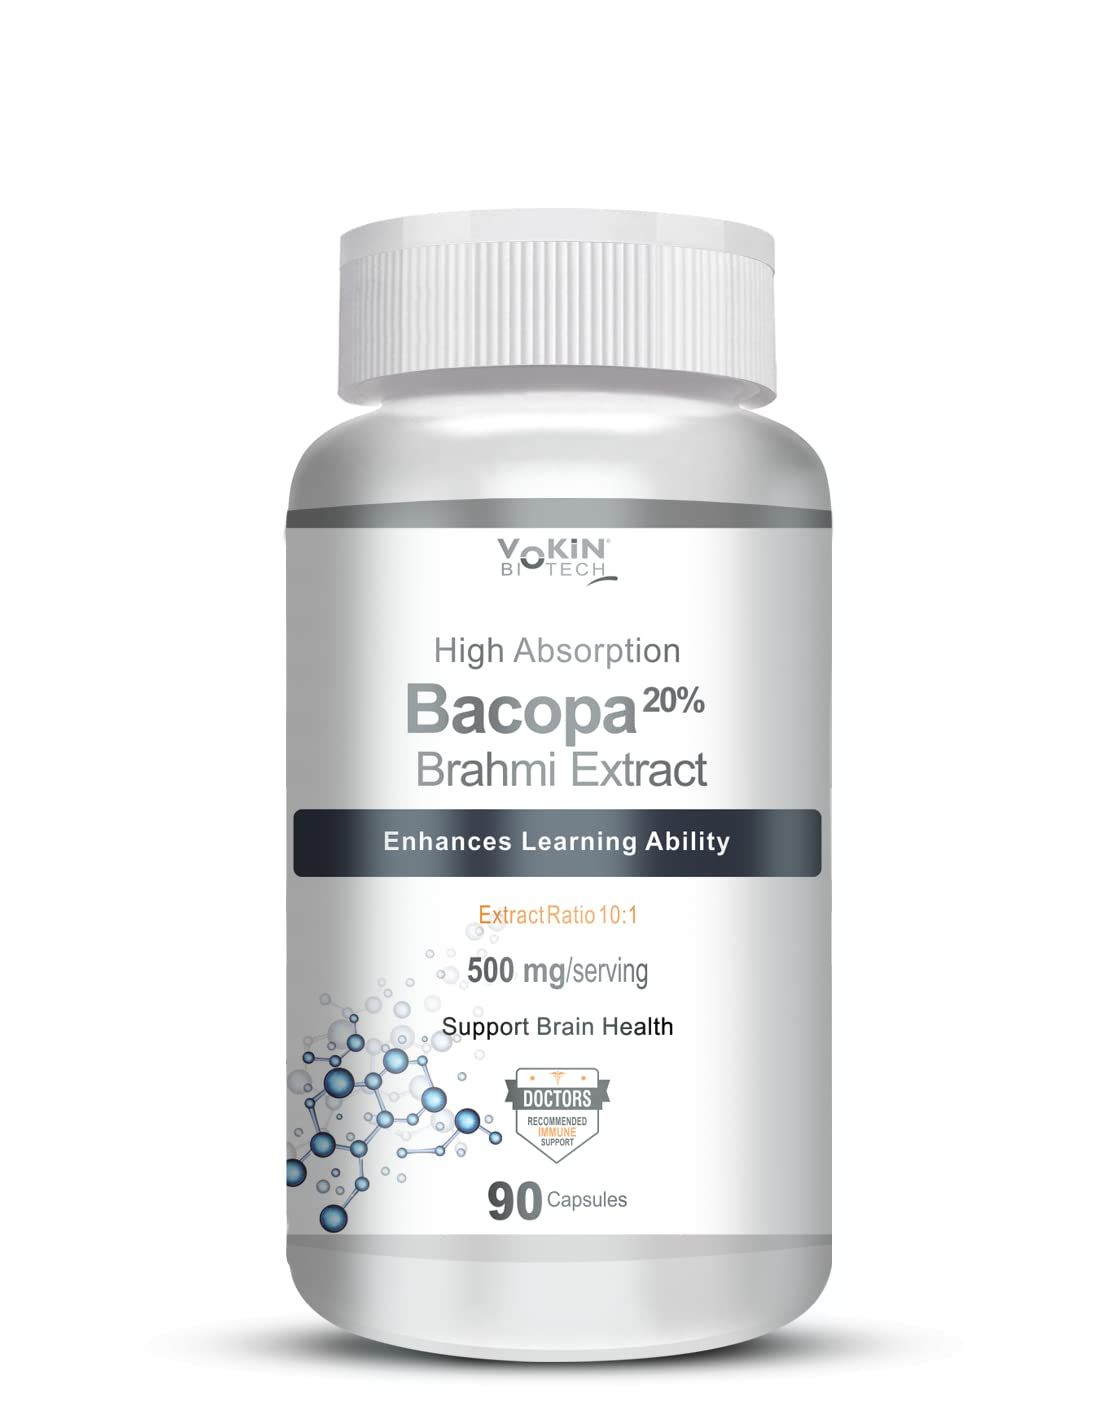 Vokin Biotech Bacopa Brahmi Extract Image